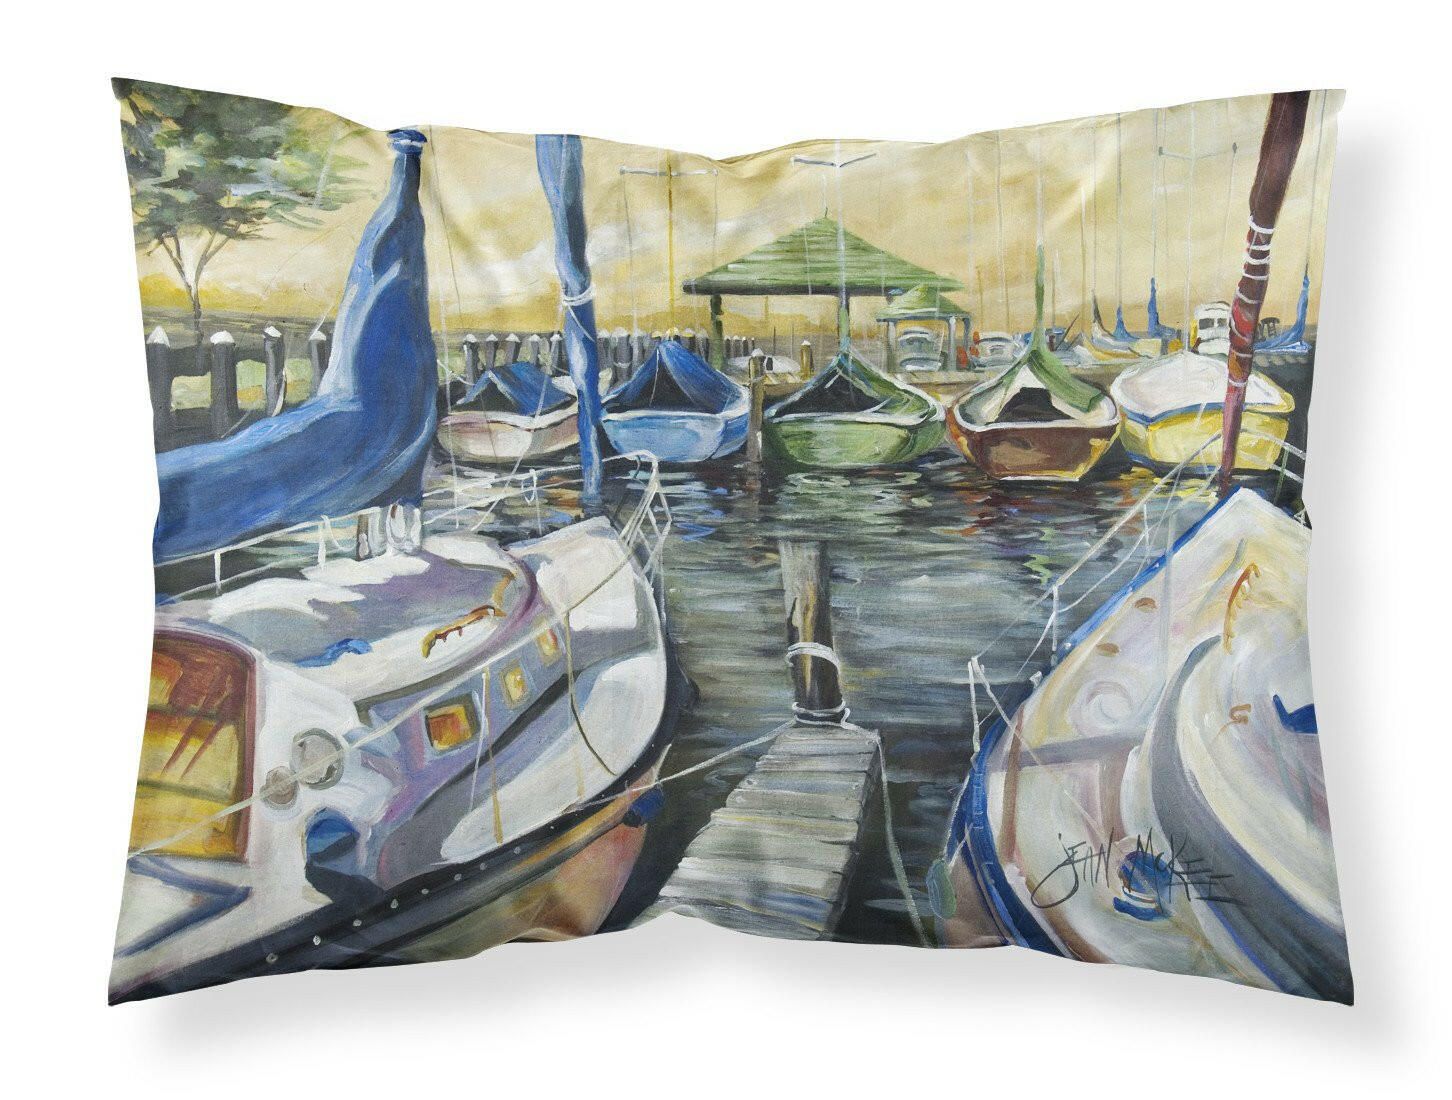 Seven Boats Sailboats Fabric Standard Pillowcase JMK1075PILLOWCASE by Caroline's Treasures